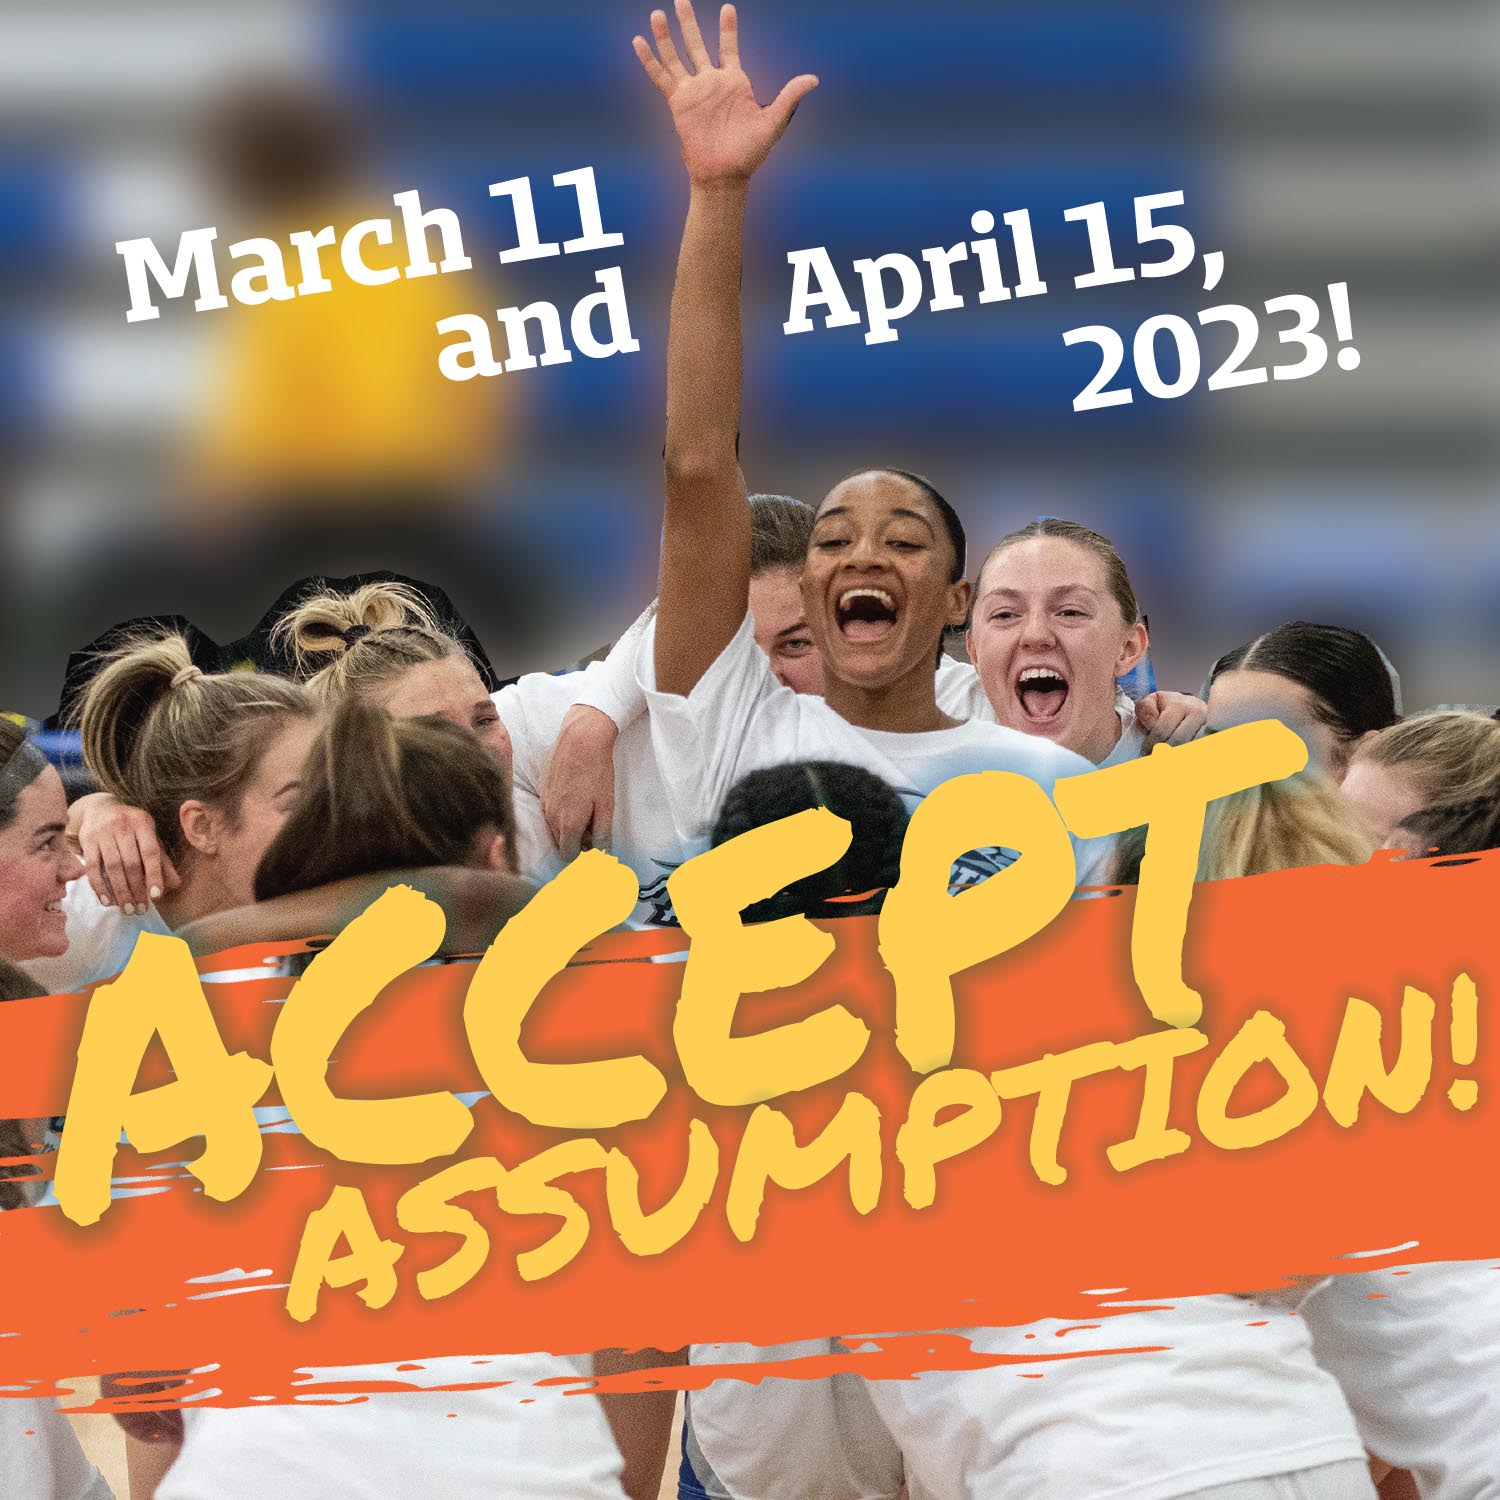 Accept Assumption - Assumption University's accepted students day